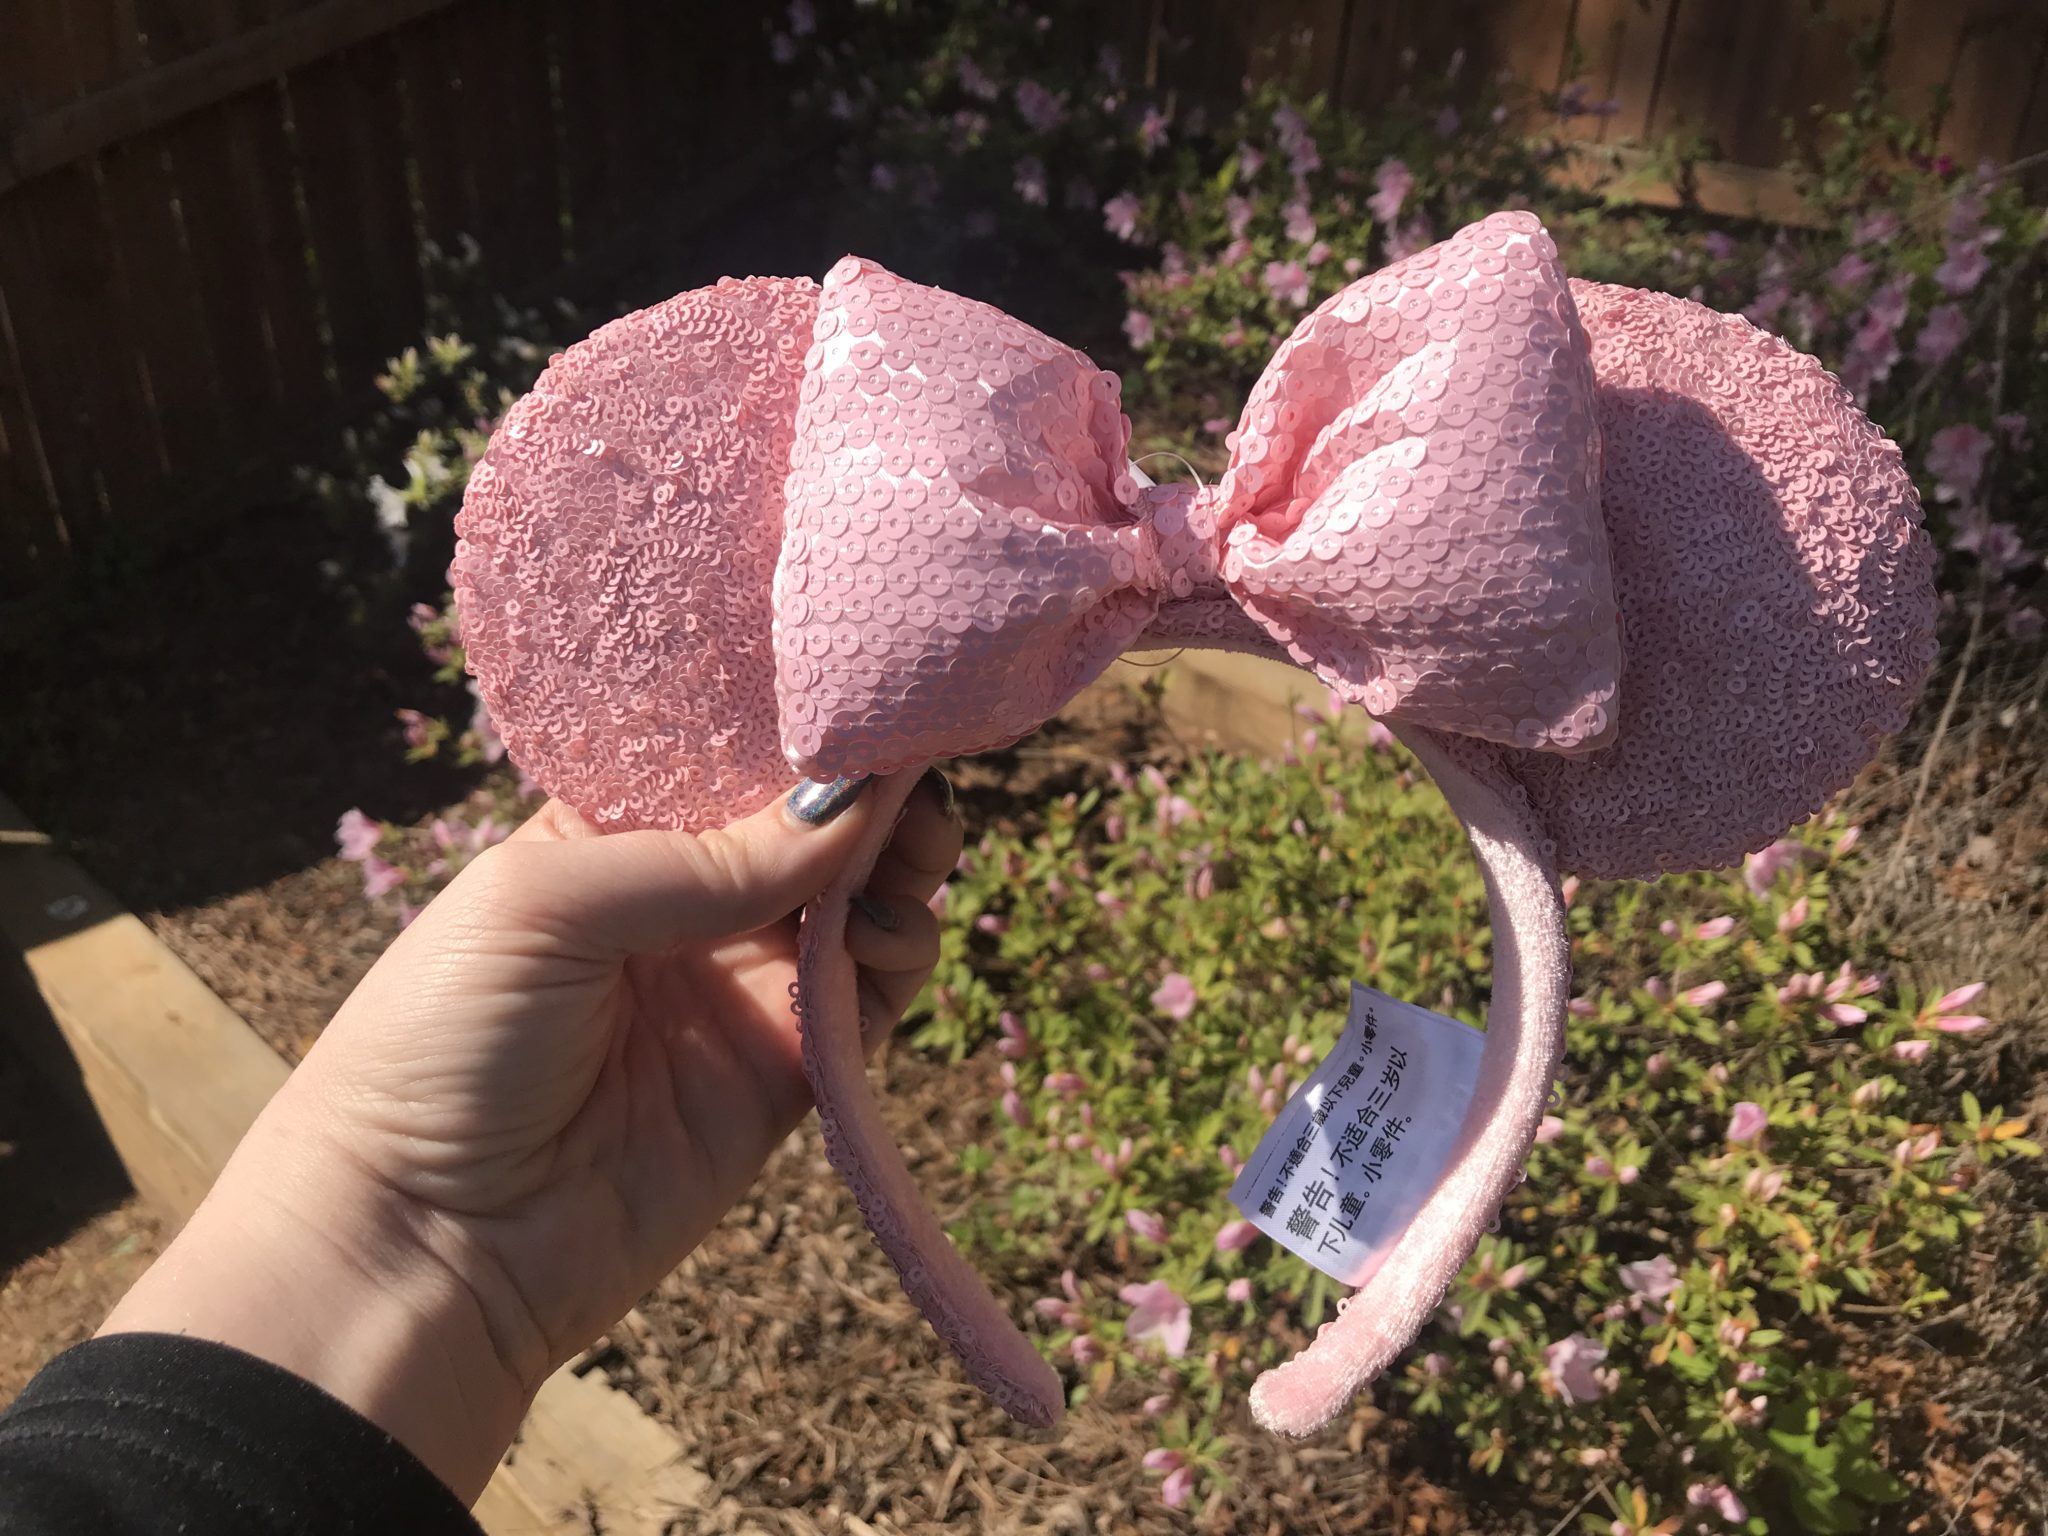 Win a Pair of Disney Parks’ Hot Millennial Pink Ears!